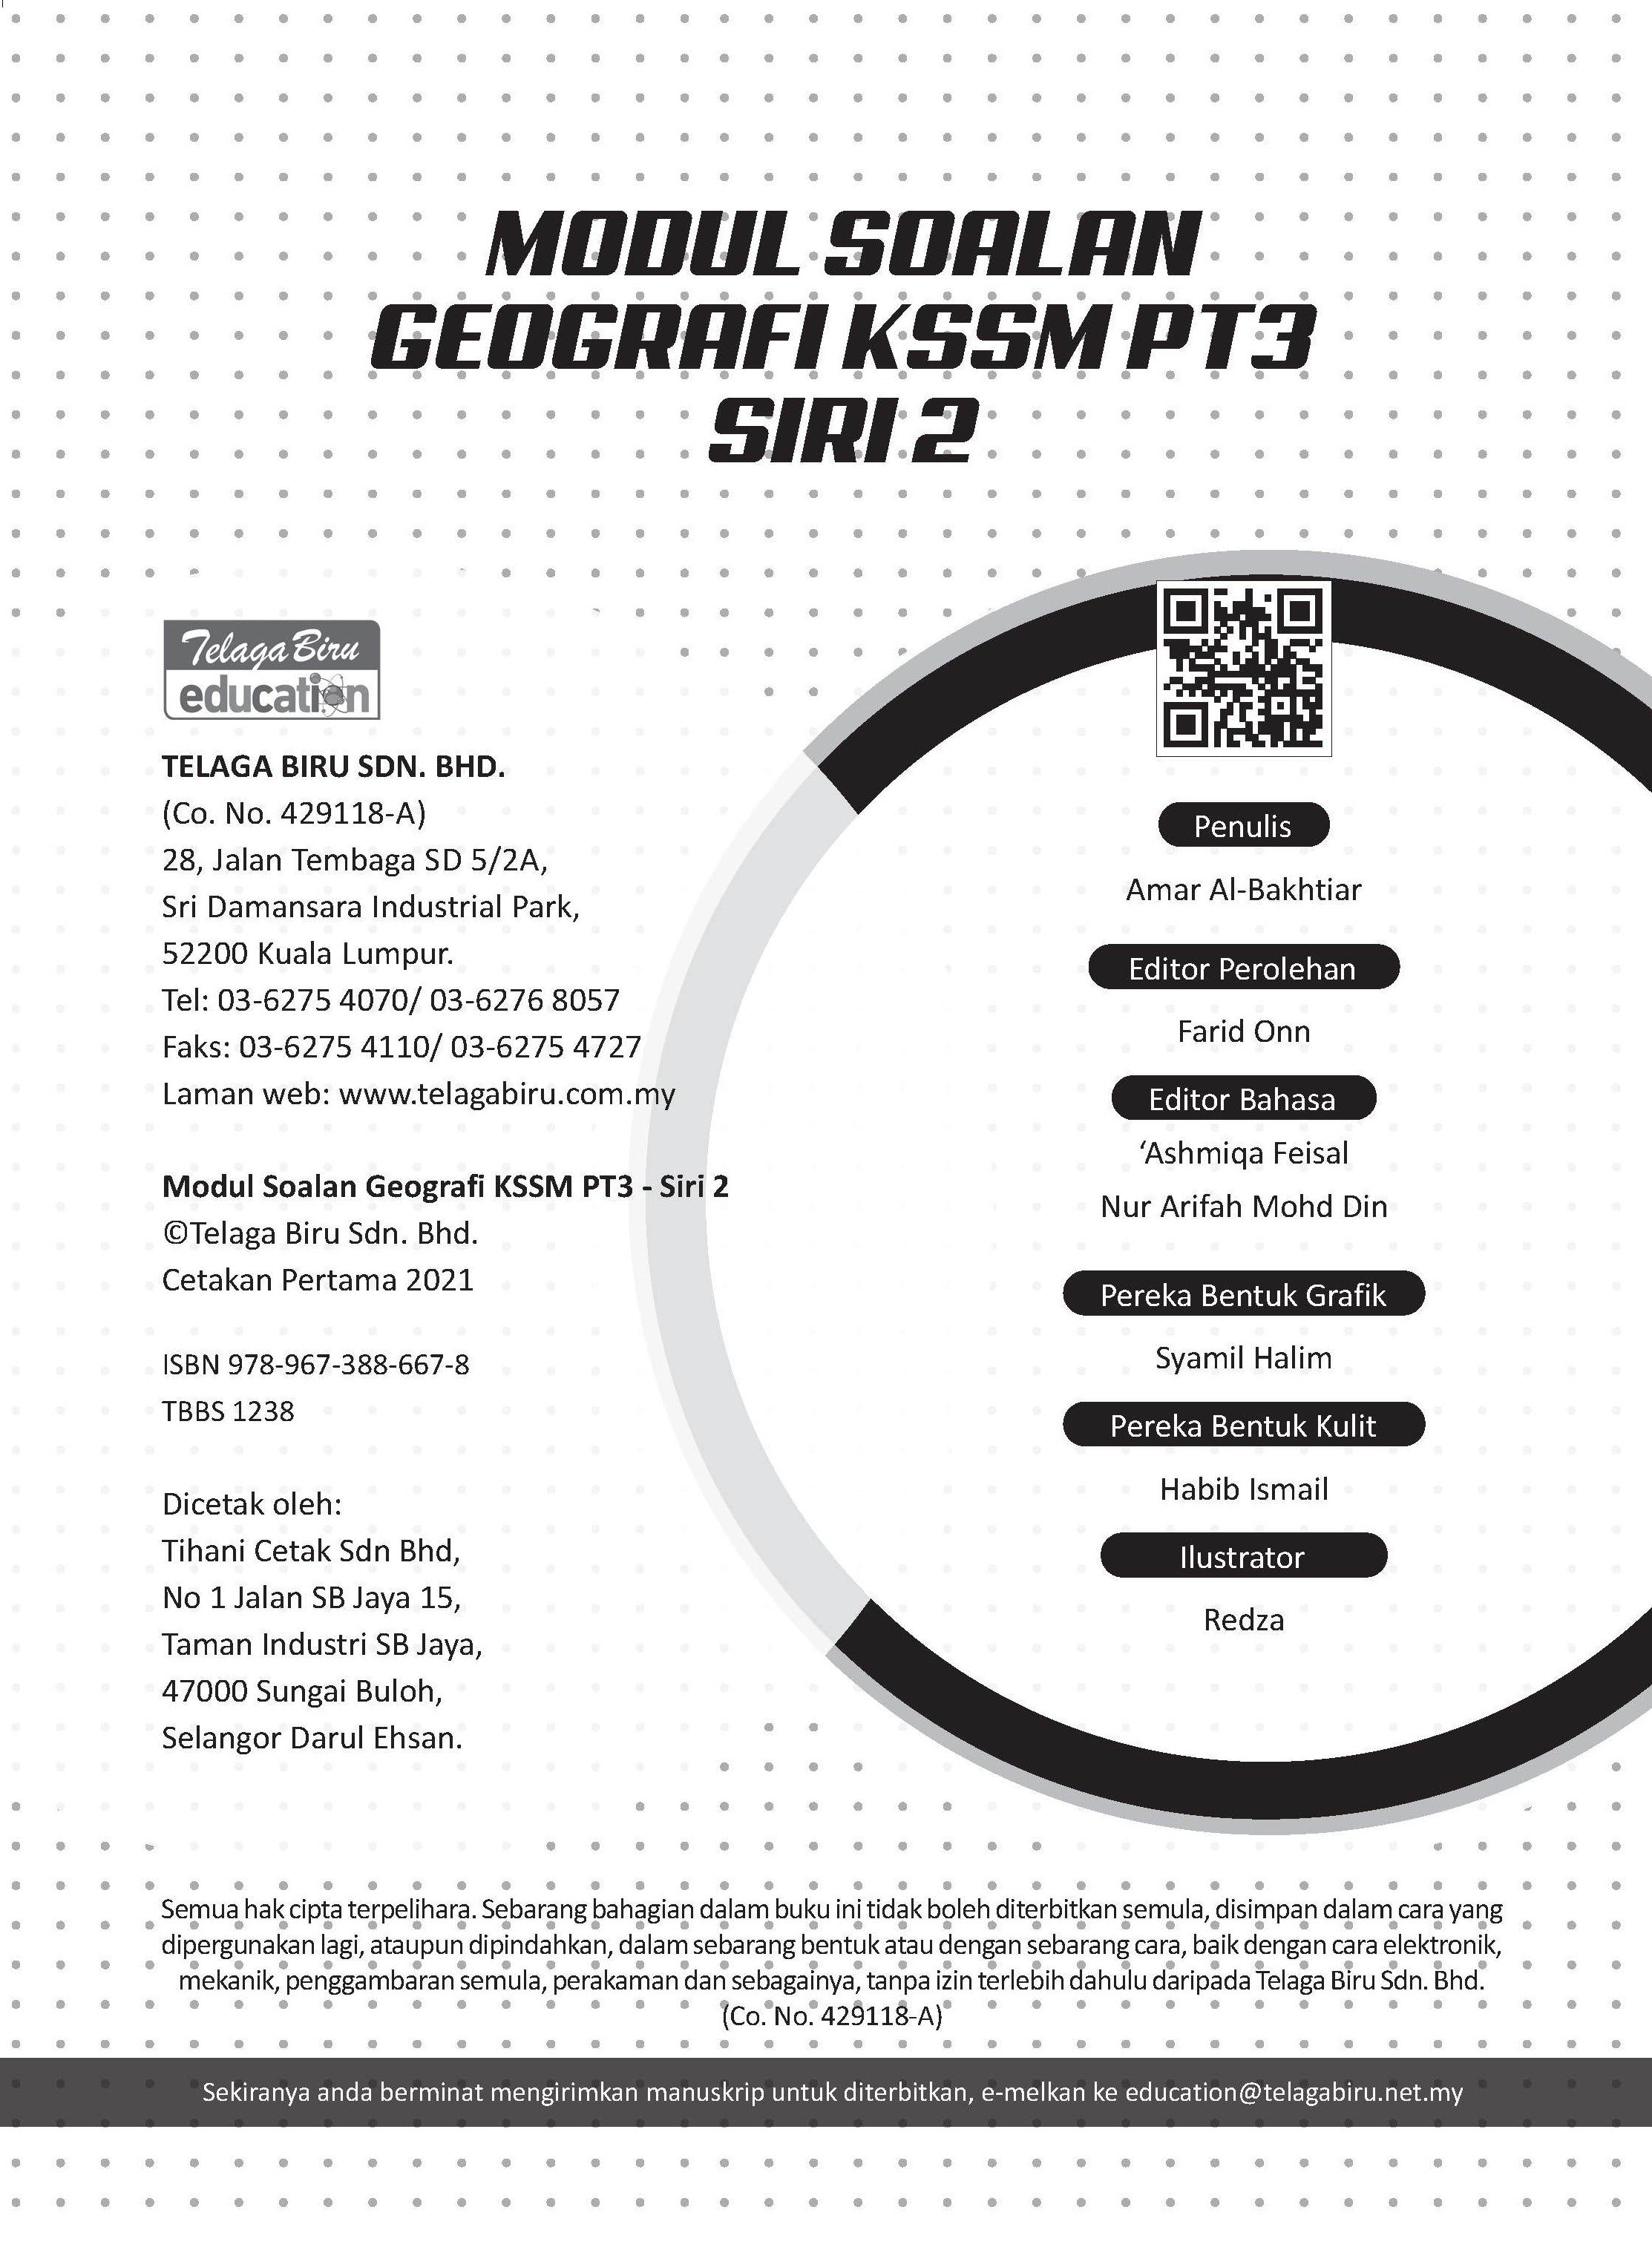 Get Smart Modul Soalan Geografi KSSM PT3 (Siri 2) - (TBBS1238)